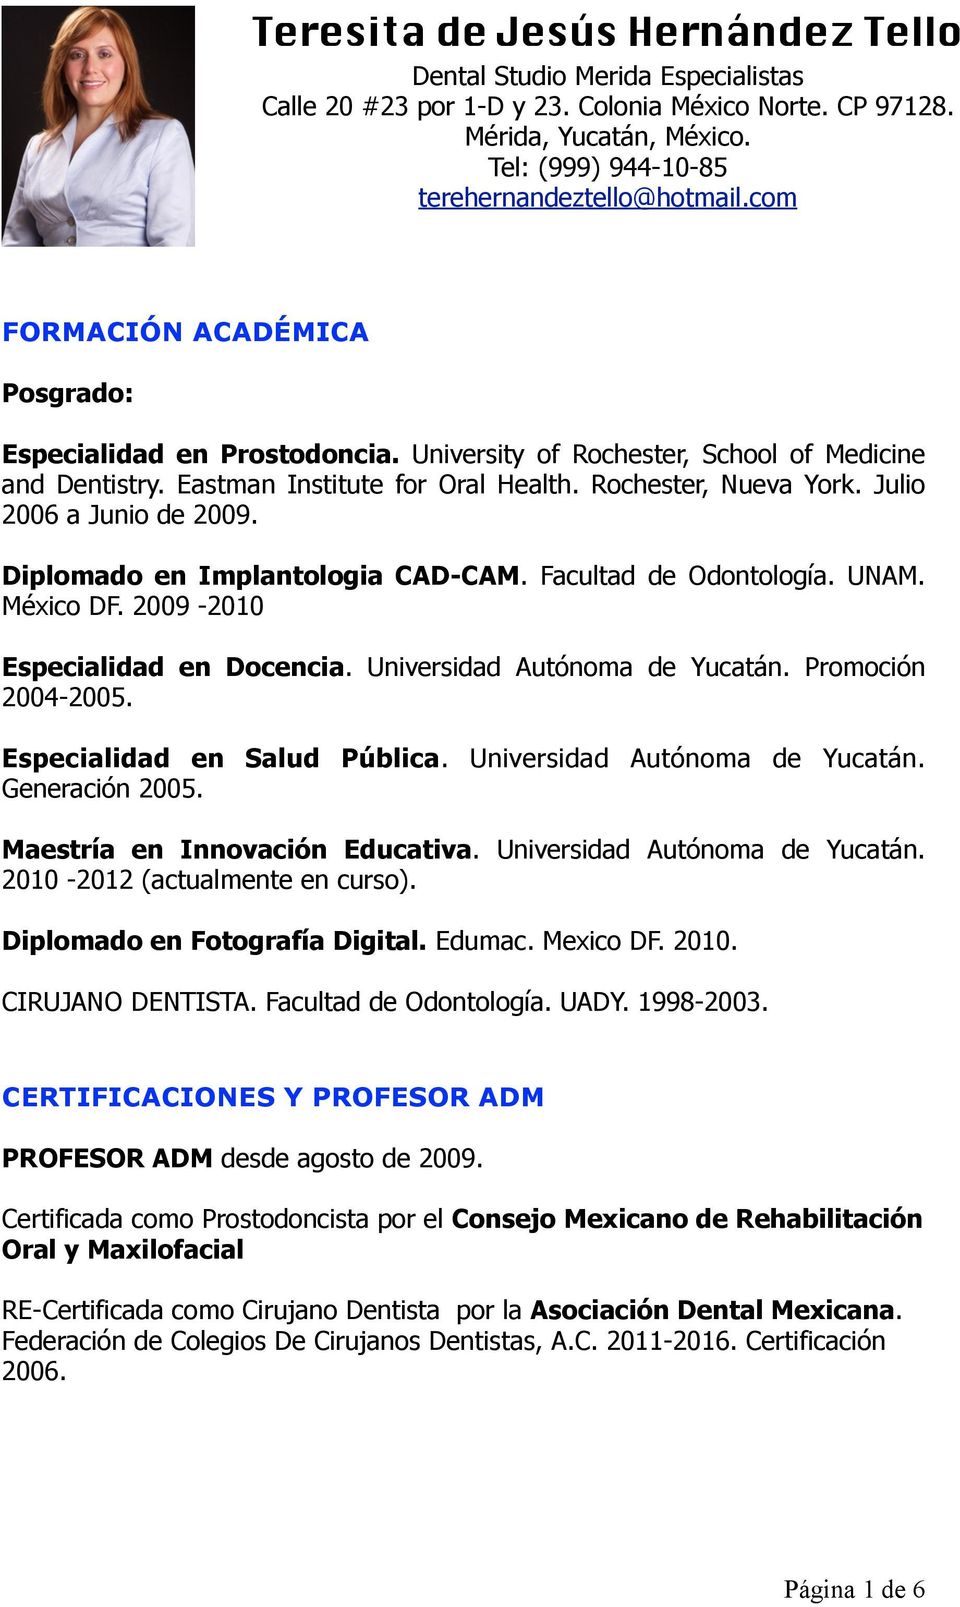 - Mérida, Yucatán, 2 de octubre de 1980. Mención Honorífica. Universidad Autónoma de Yucatán, 1998-2004. Dirección.- Calle 55 #250 por Av. 32. Col. San Ramón Teléfono.